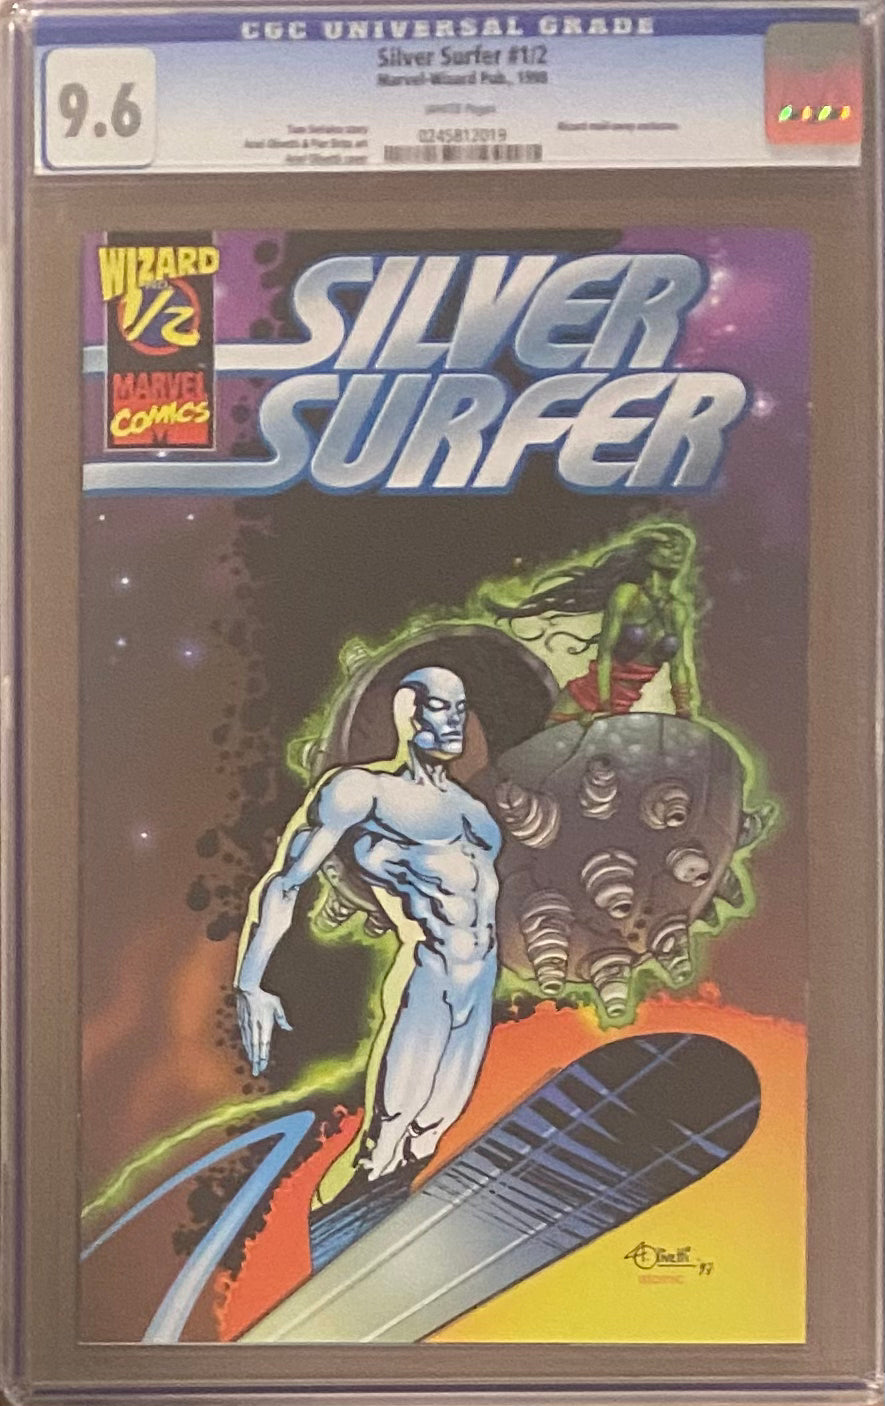 Silver Surfer #1/2 CGC 9.6